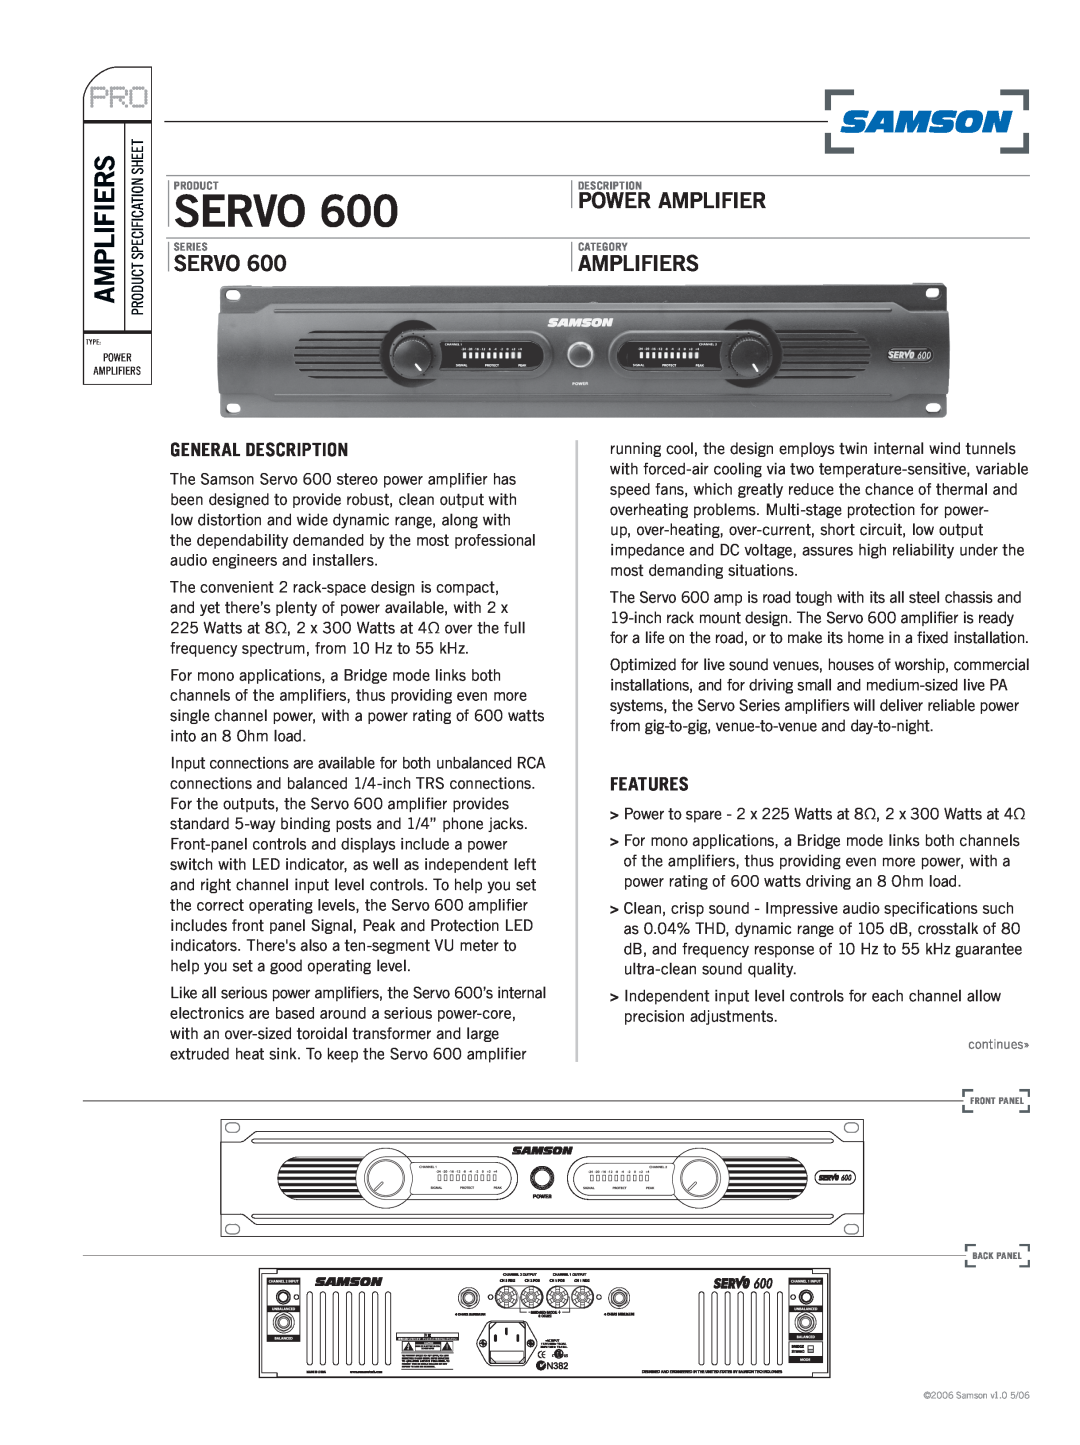 Samson 600 specifications General Description, Features, Servo, Amplifiers, Power Amplifier 